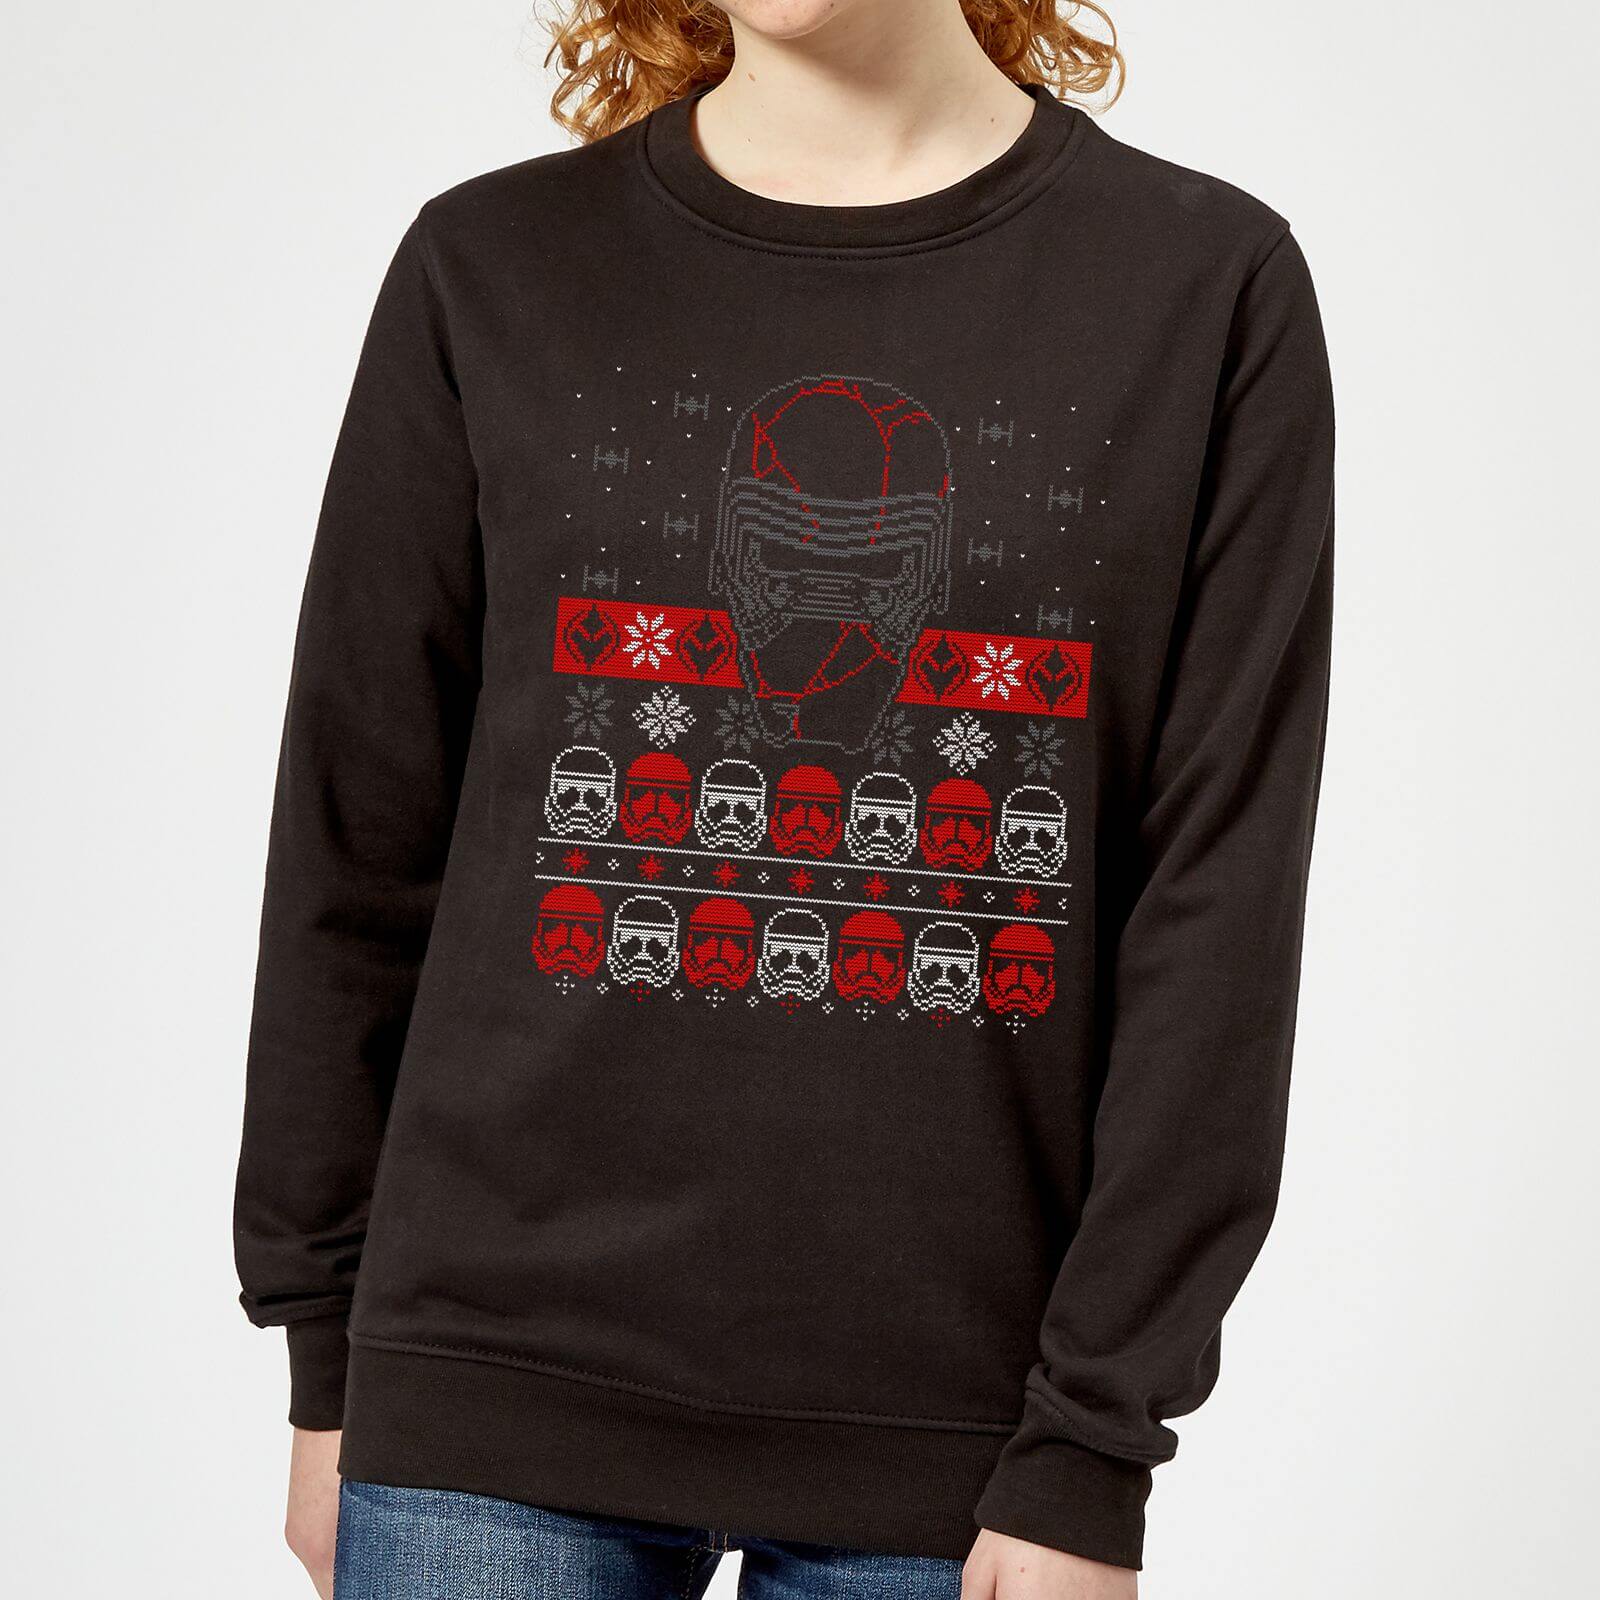 Star Wars Kylo Ren Ugly Holiday Women's Sweatshirt - Black - XS